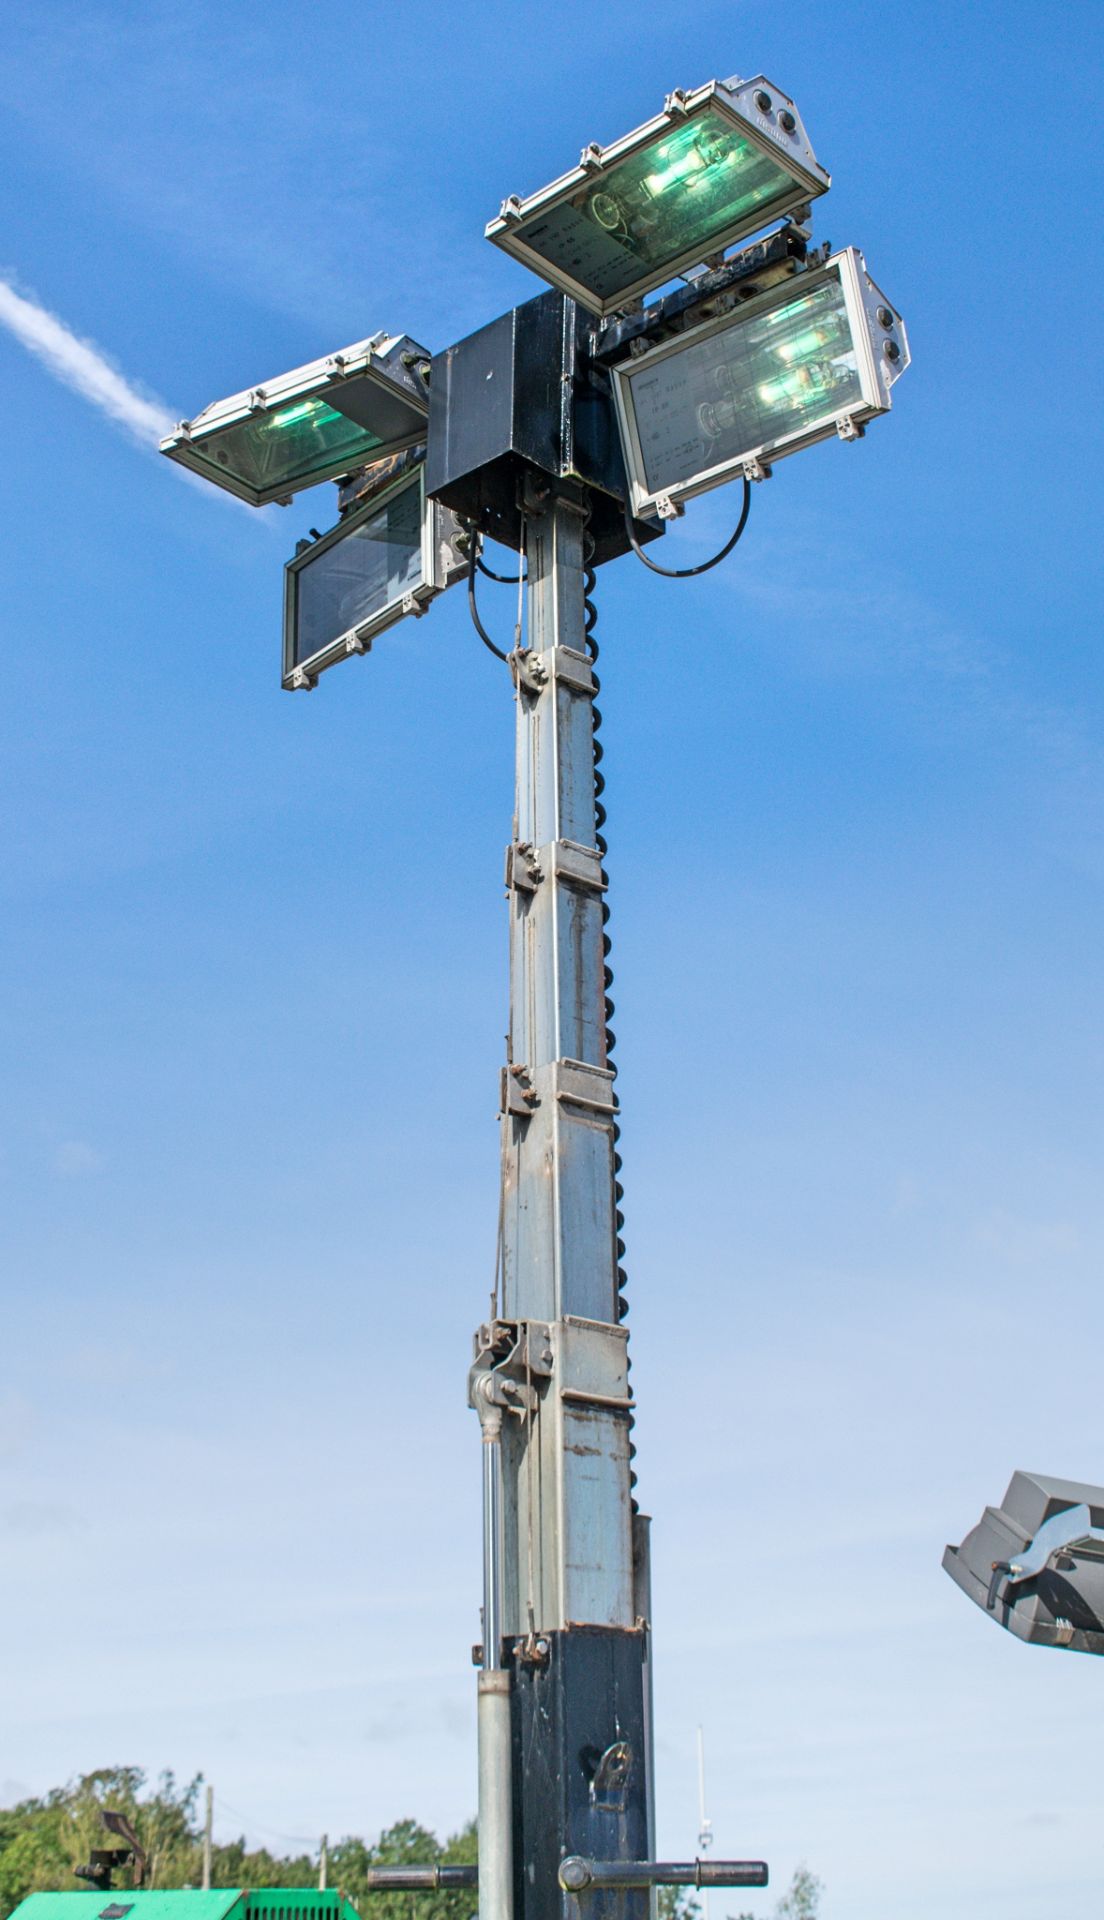 TOWERLIGHT SUPERLIGHT VT-1 diesel driven mobile lighting tower S/N: 701683K Recorded hours: 3745 - Image 3 of 5